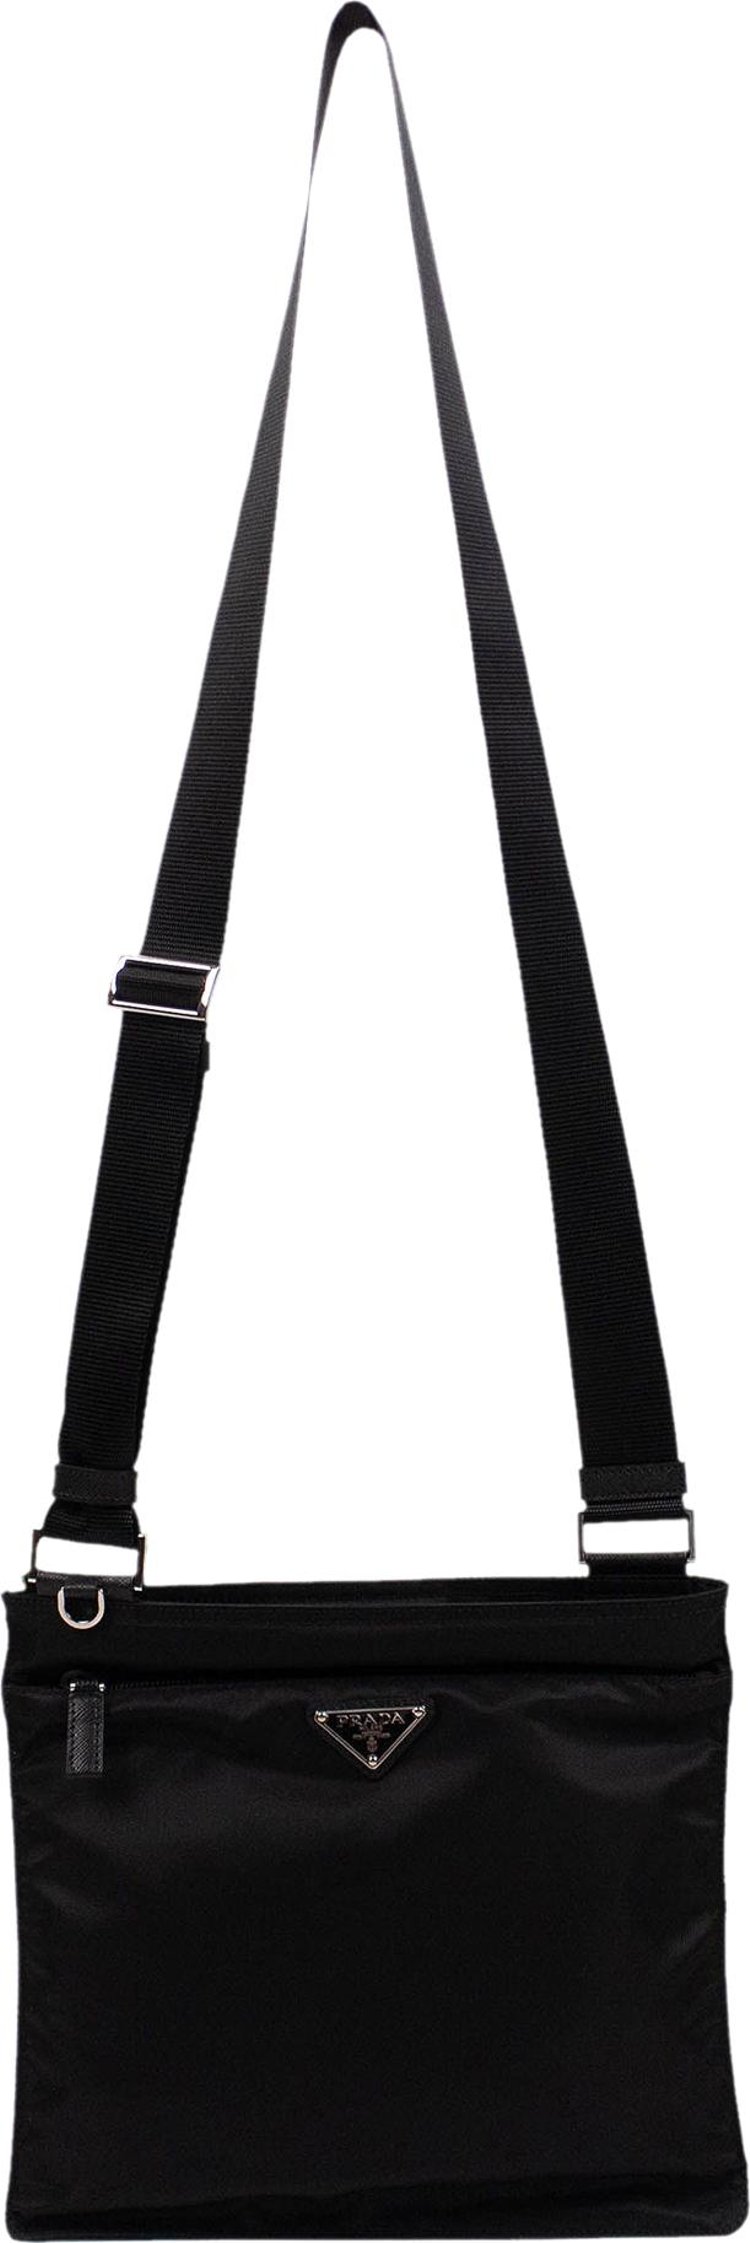 Prada Black Canvas Bag Strap - Black Bag Accessories, Accessories -  PRA855697